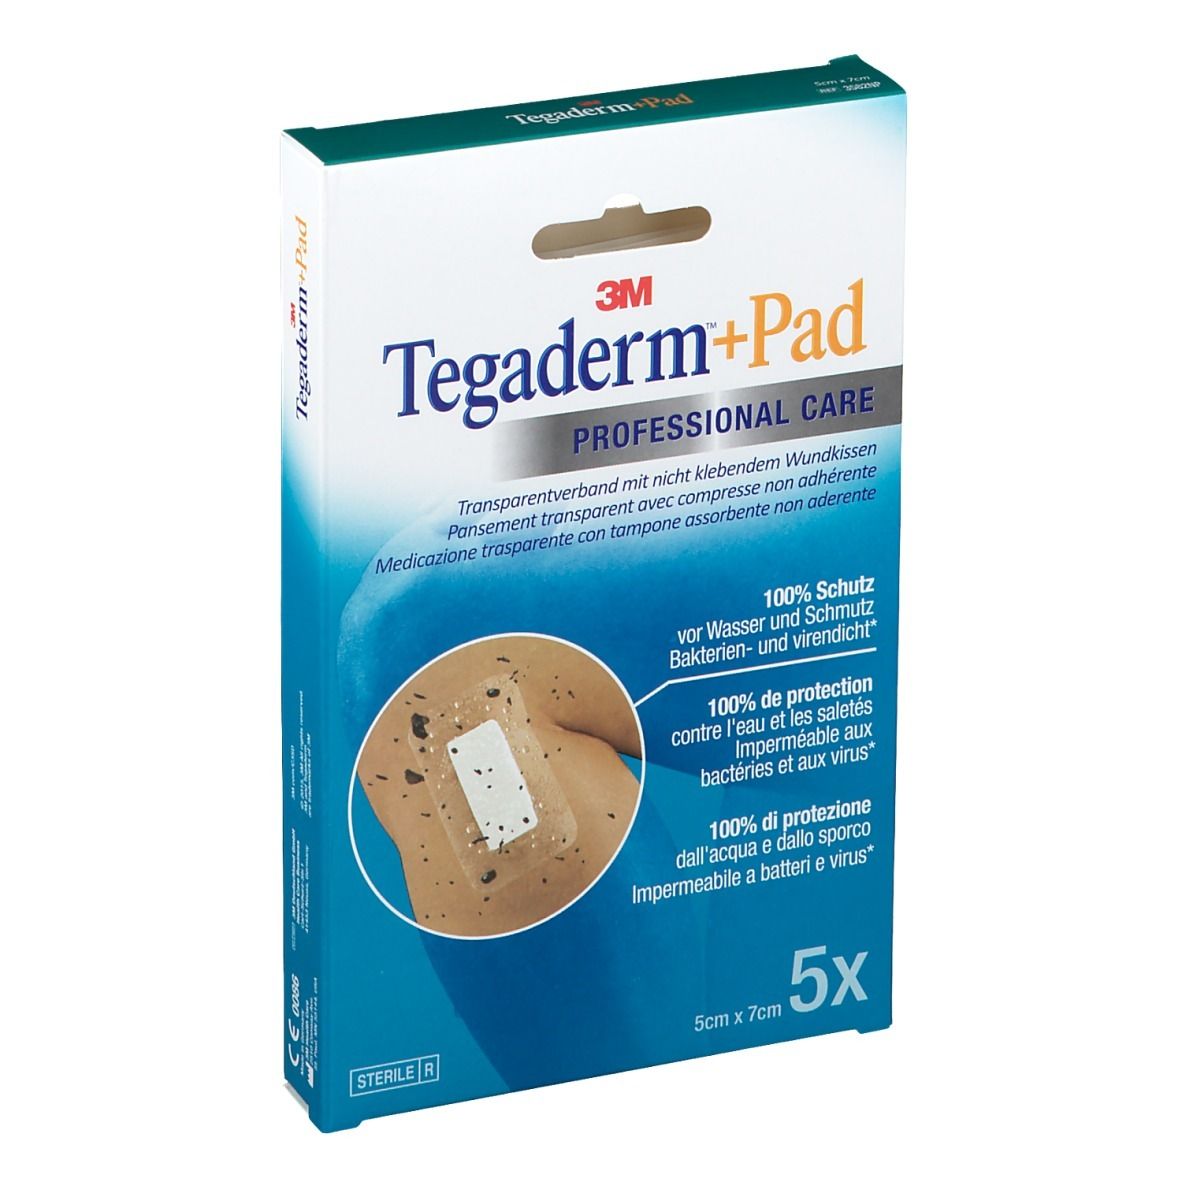 3M™ Tegaderm™ + Pad Transparentverband mit absorbtionsfähiger Wundauflage